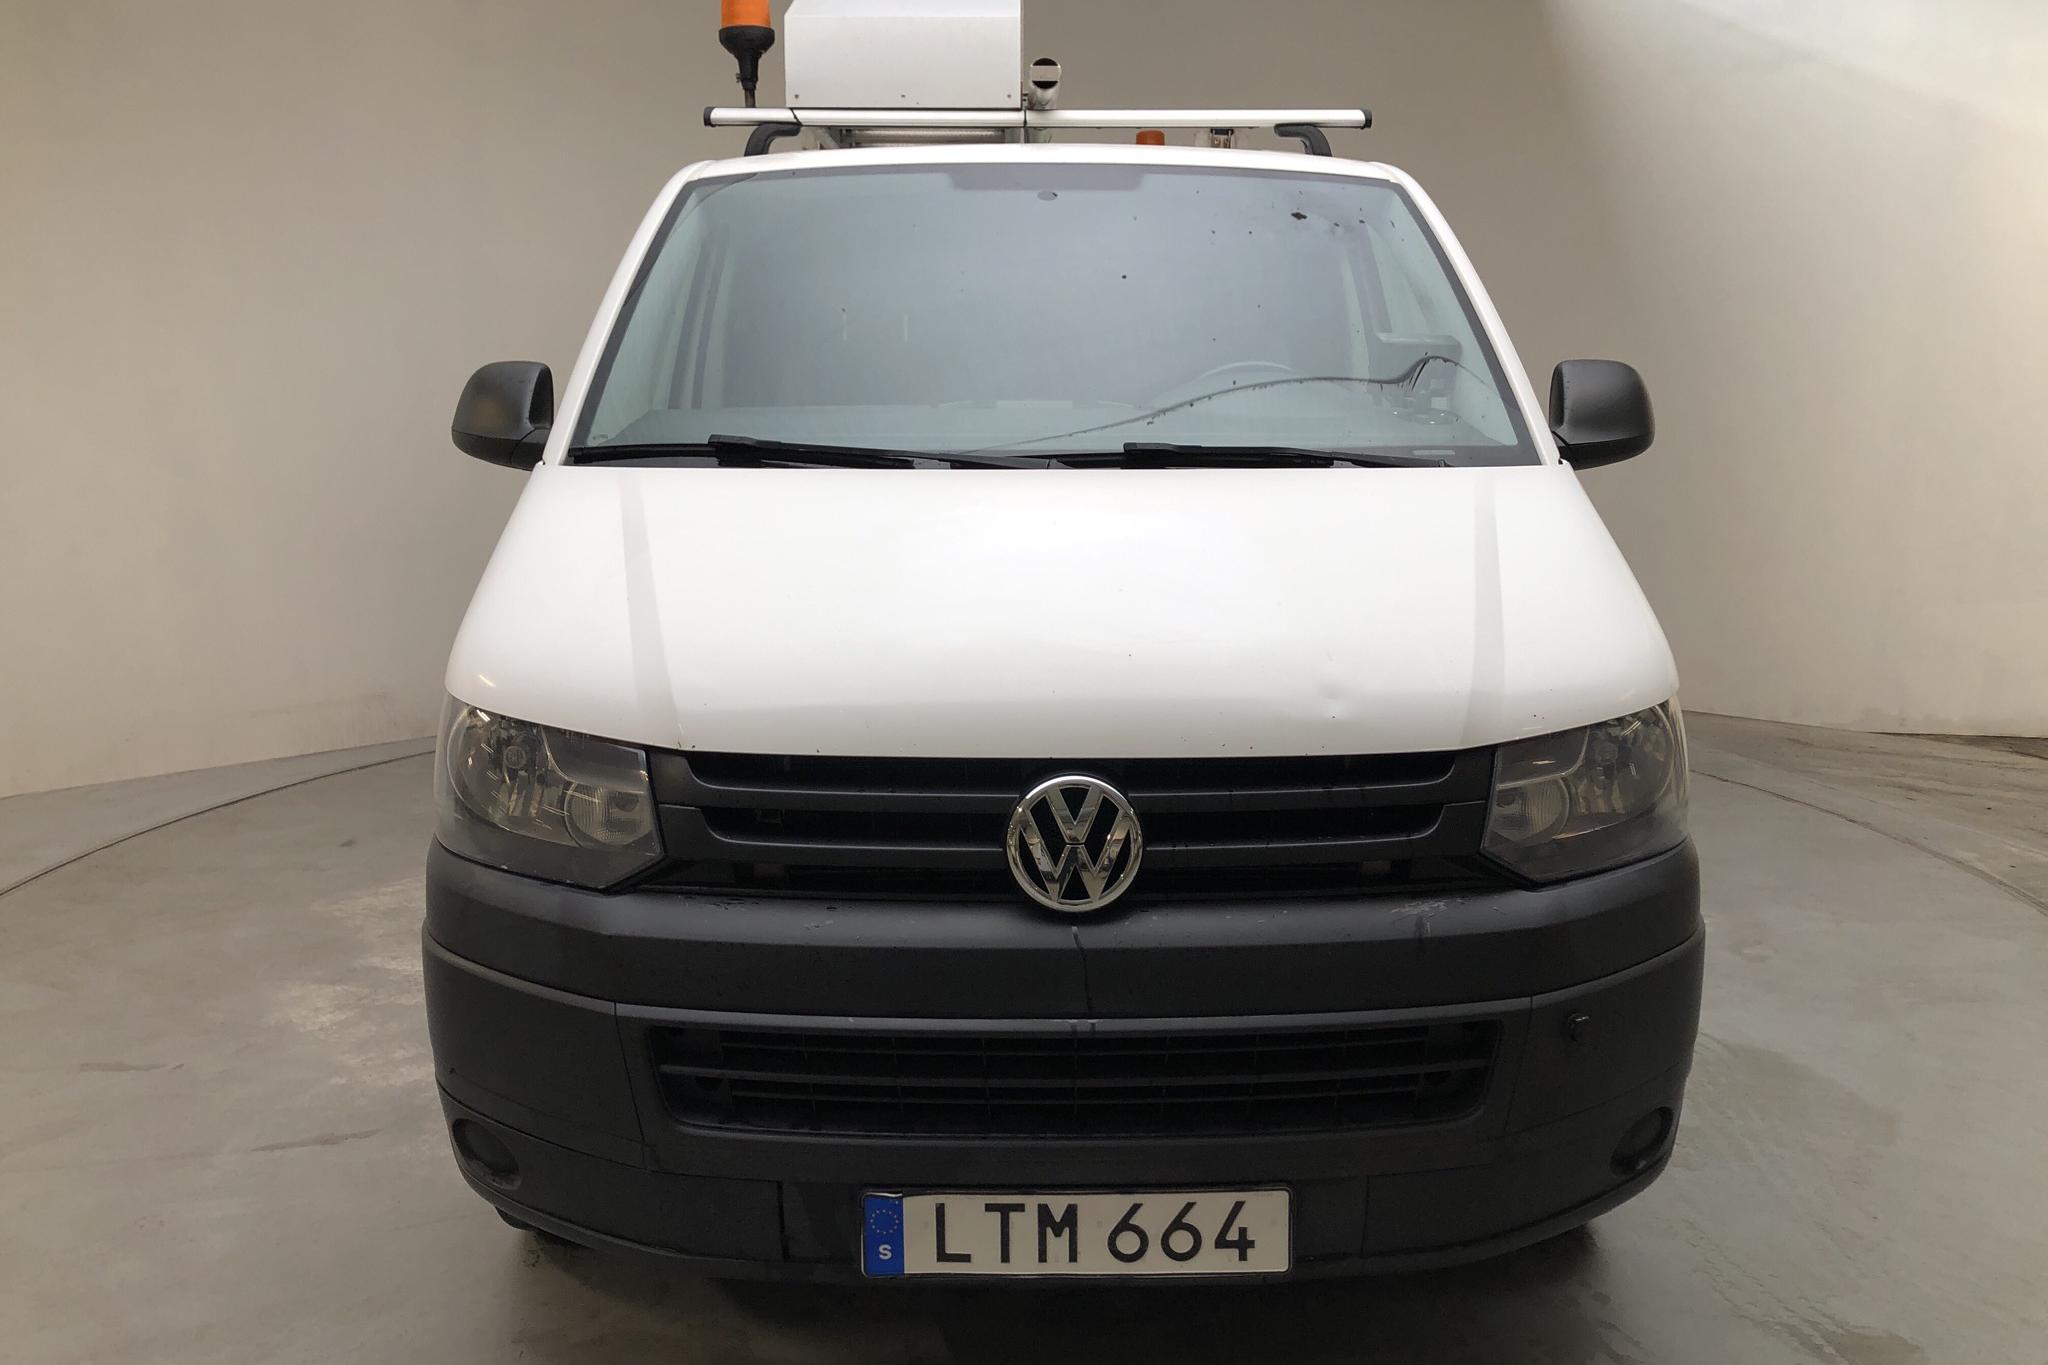 VW Transporter T5 2.0 TDI 4MOTION (140hk) - 151 310 km - Manual - white - 2015